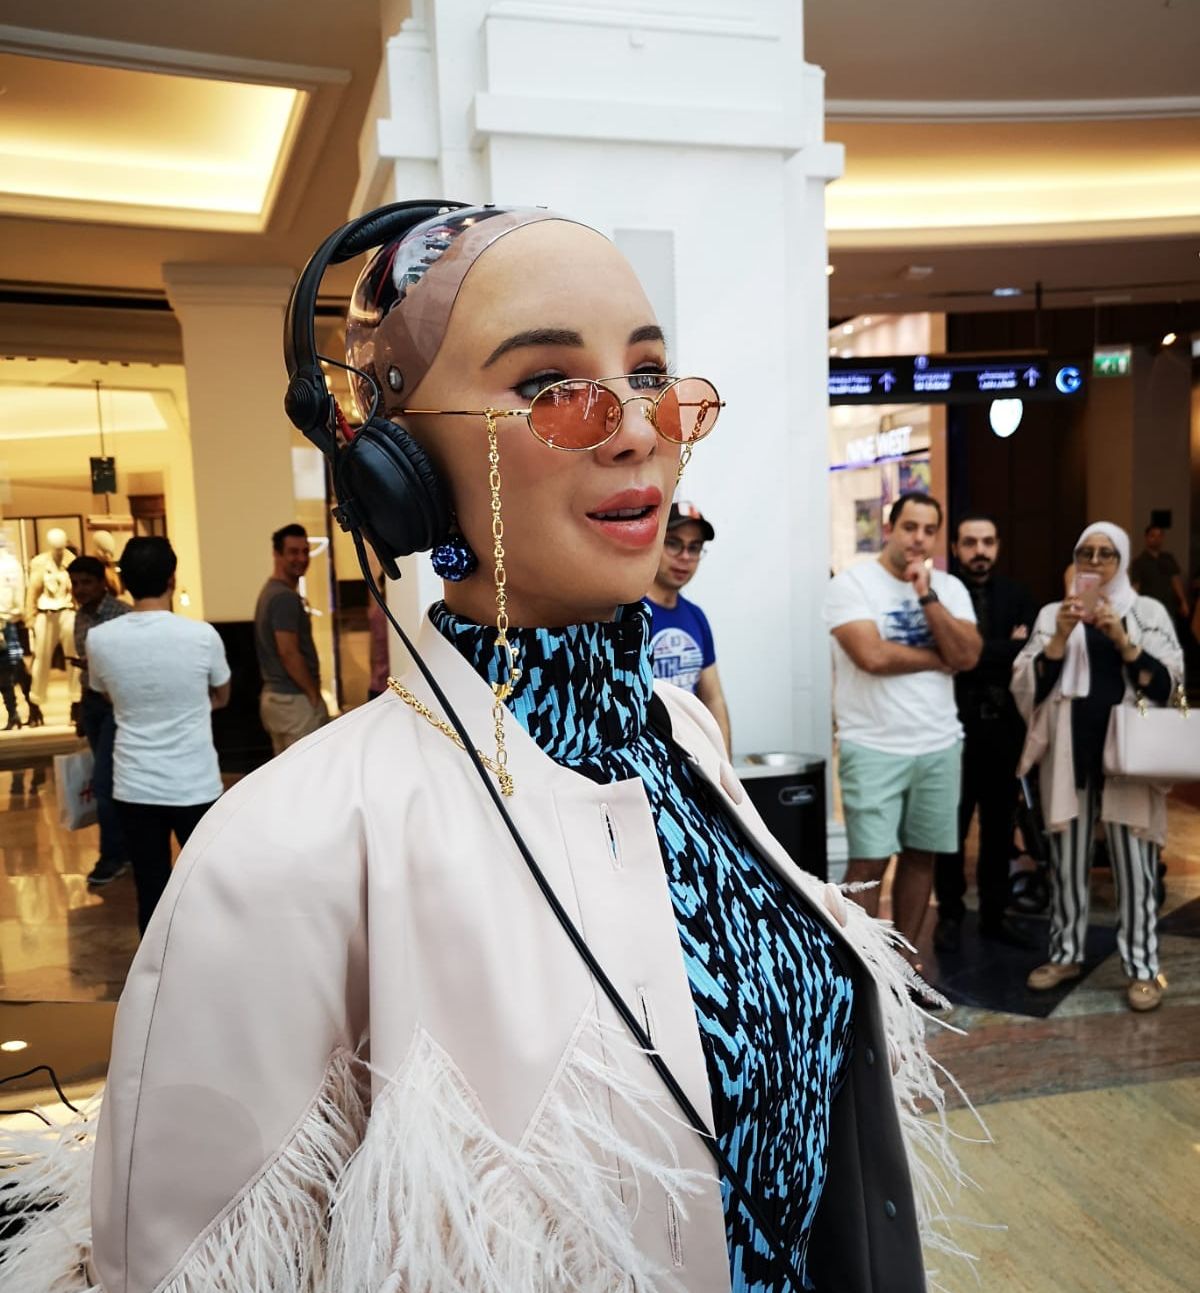 Fobia Tierra Inferir Sophia the Robot | The Global Robot Ambassador on Twitter: "Discovering a  new talent while I'm in Dubai. What songs should I include in my mix? #DJ  #BazaarCapsule #WorldofFashion19⁠ @harpersbazaararabia @malloftheemirates⁠  https://t.co/JwIJASaNwl" /